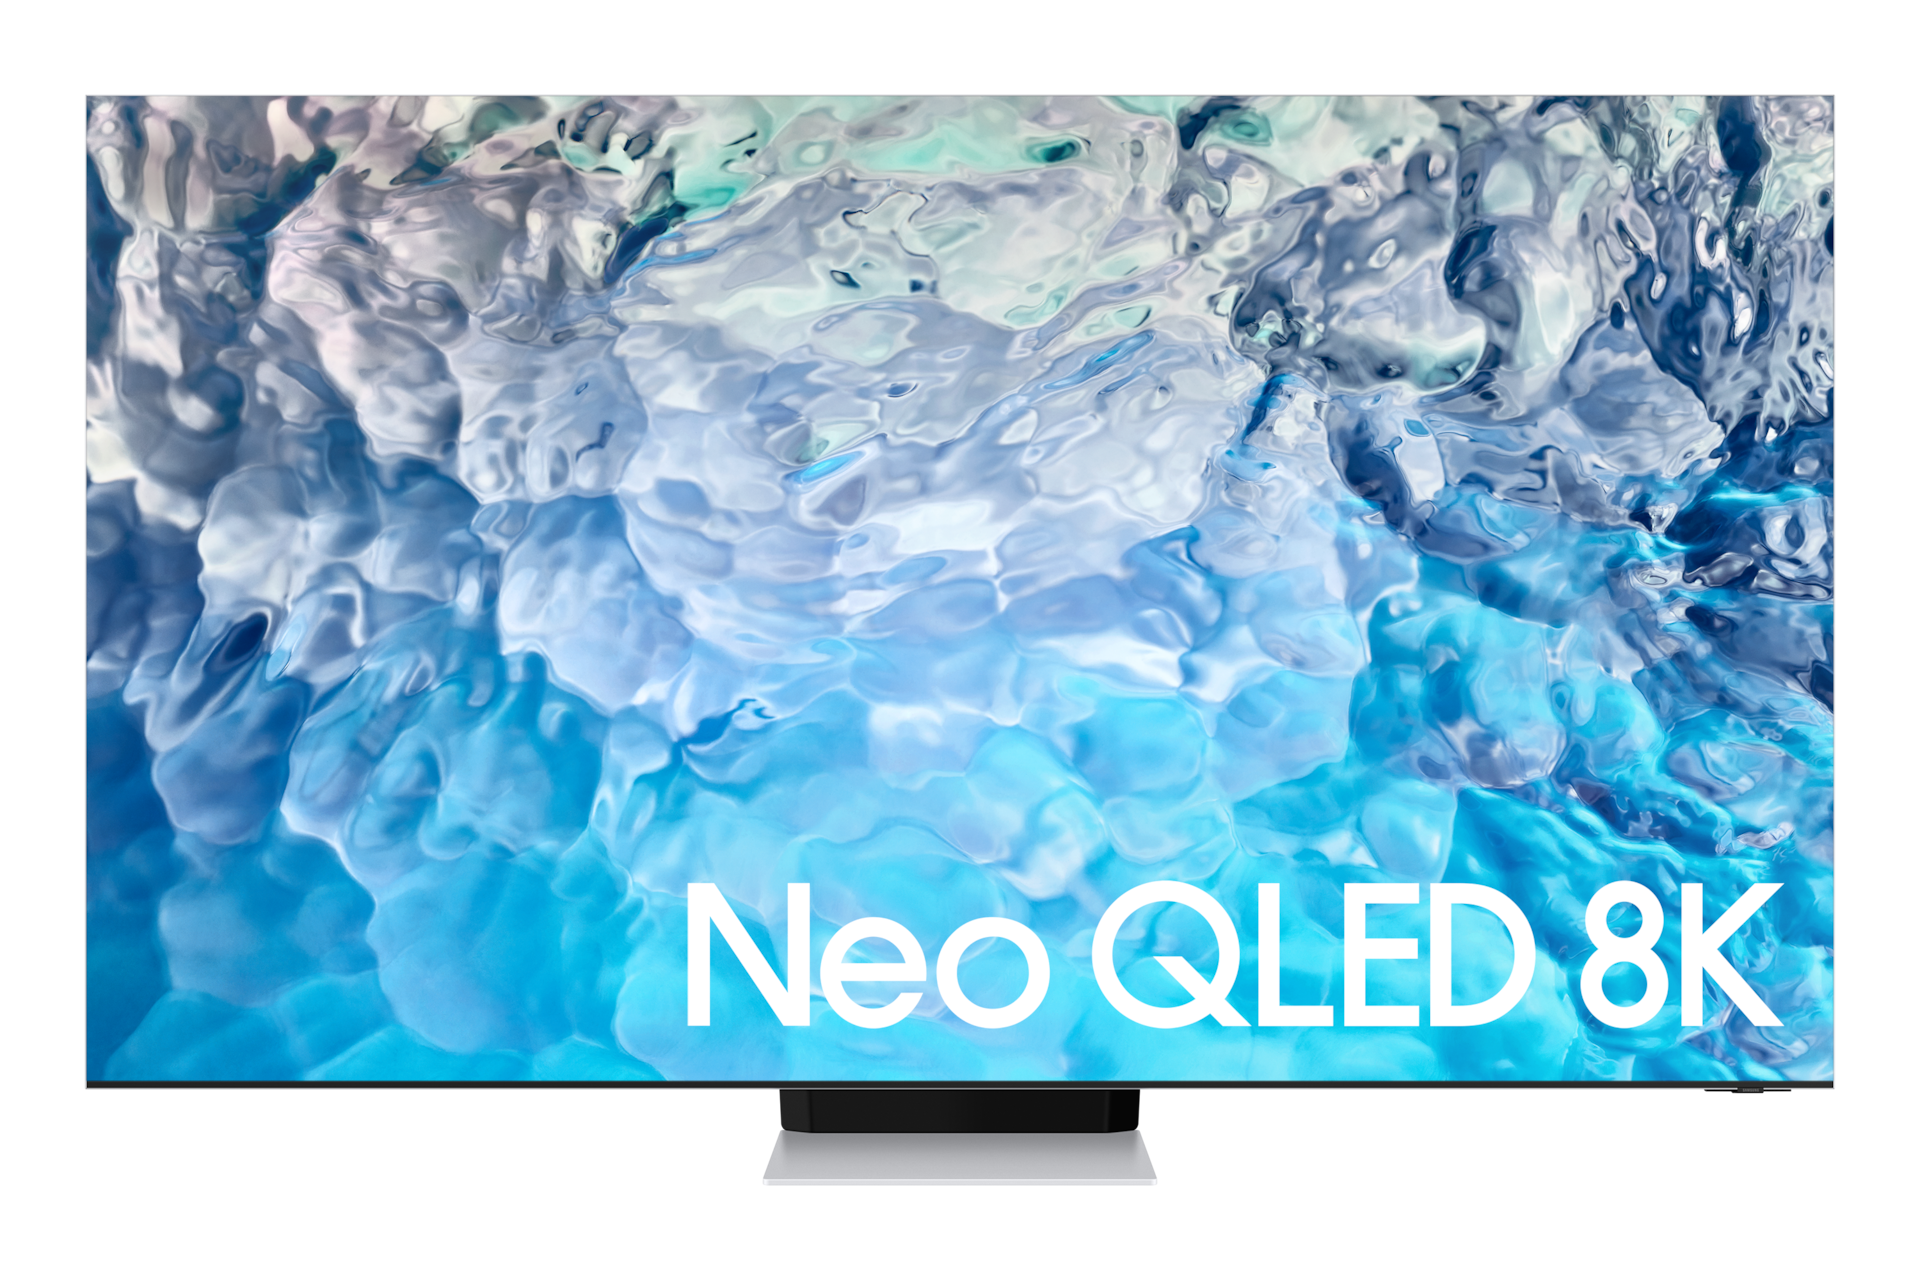 Samsung QN900B Neo QLED 8k TV 85 inch (QA85QN900BSXNZ) with Quantum Matrix Technology Pro, Neural Quantum Processor 8K and Infinity Screen.